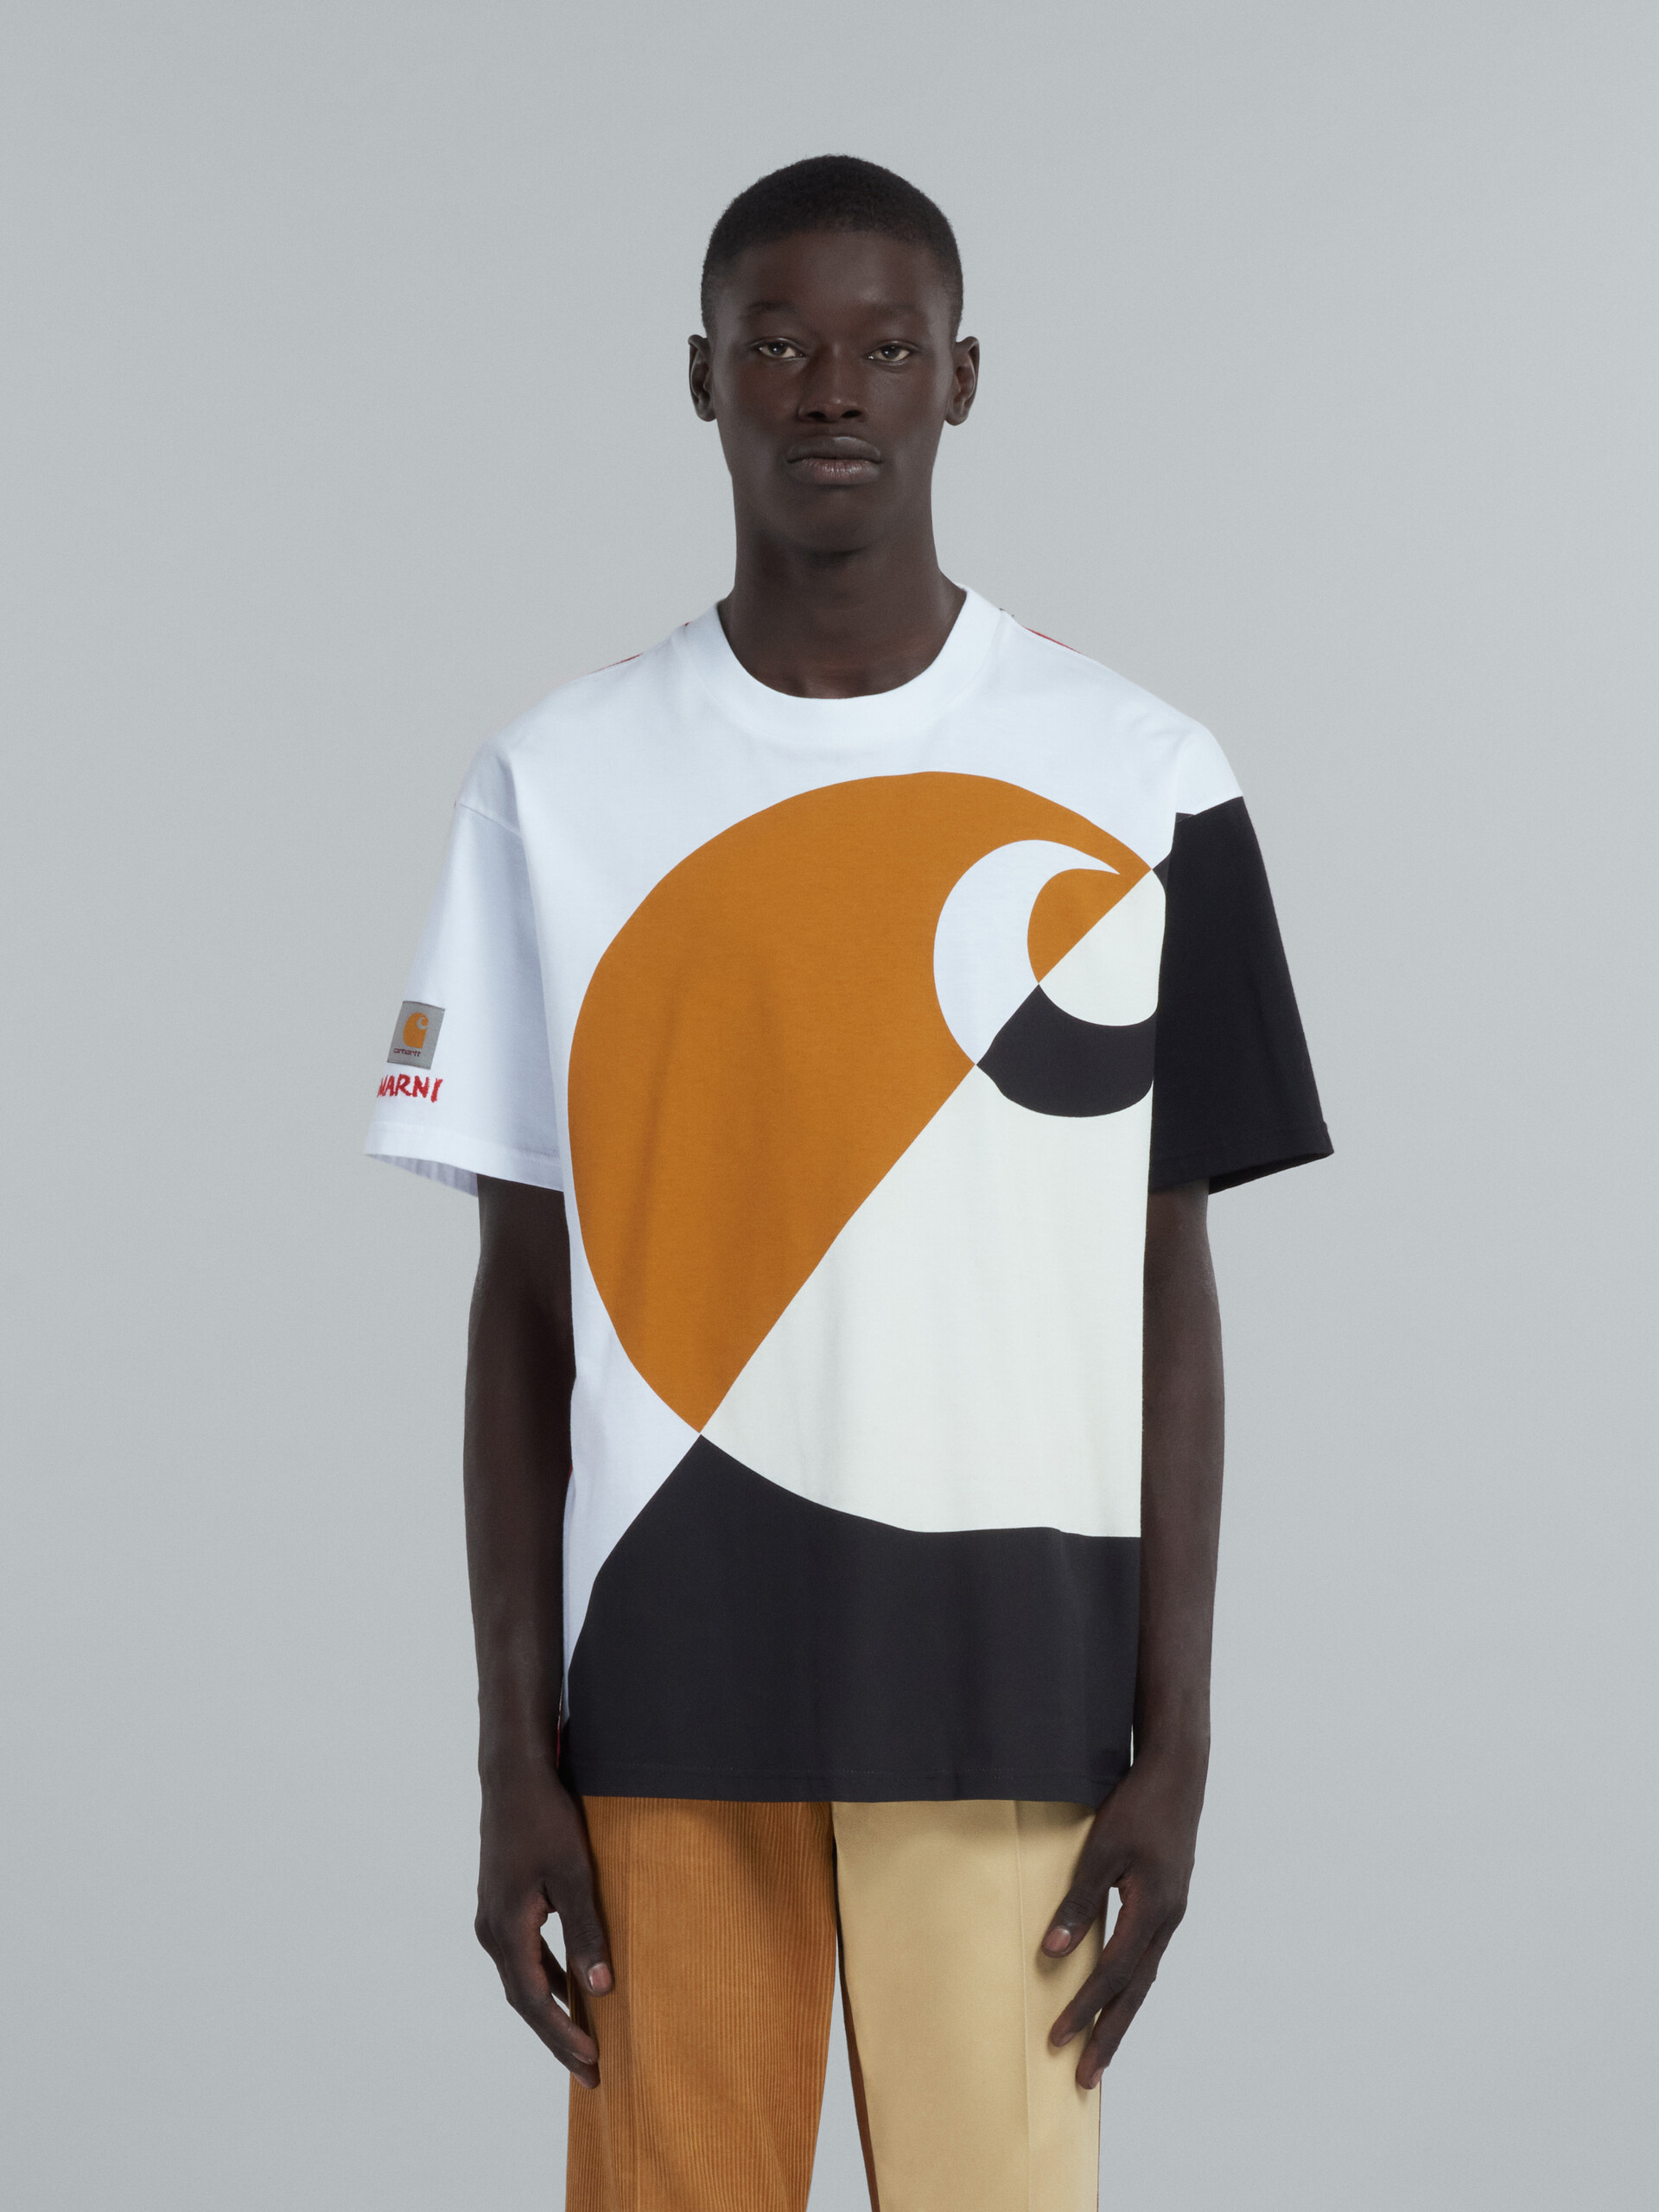 MARNI x CARHARTT WIP 레드 로고 티셔츠 - 티셔츠 - Image 2